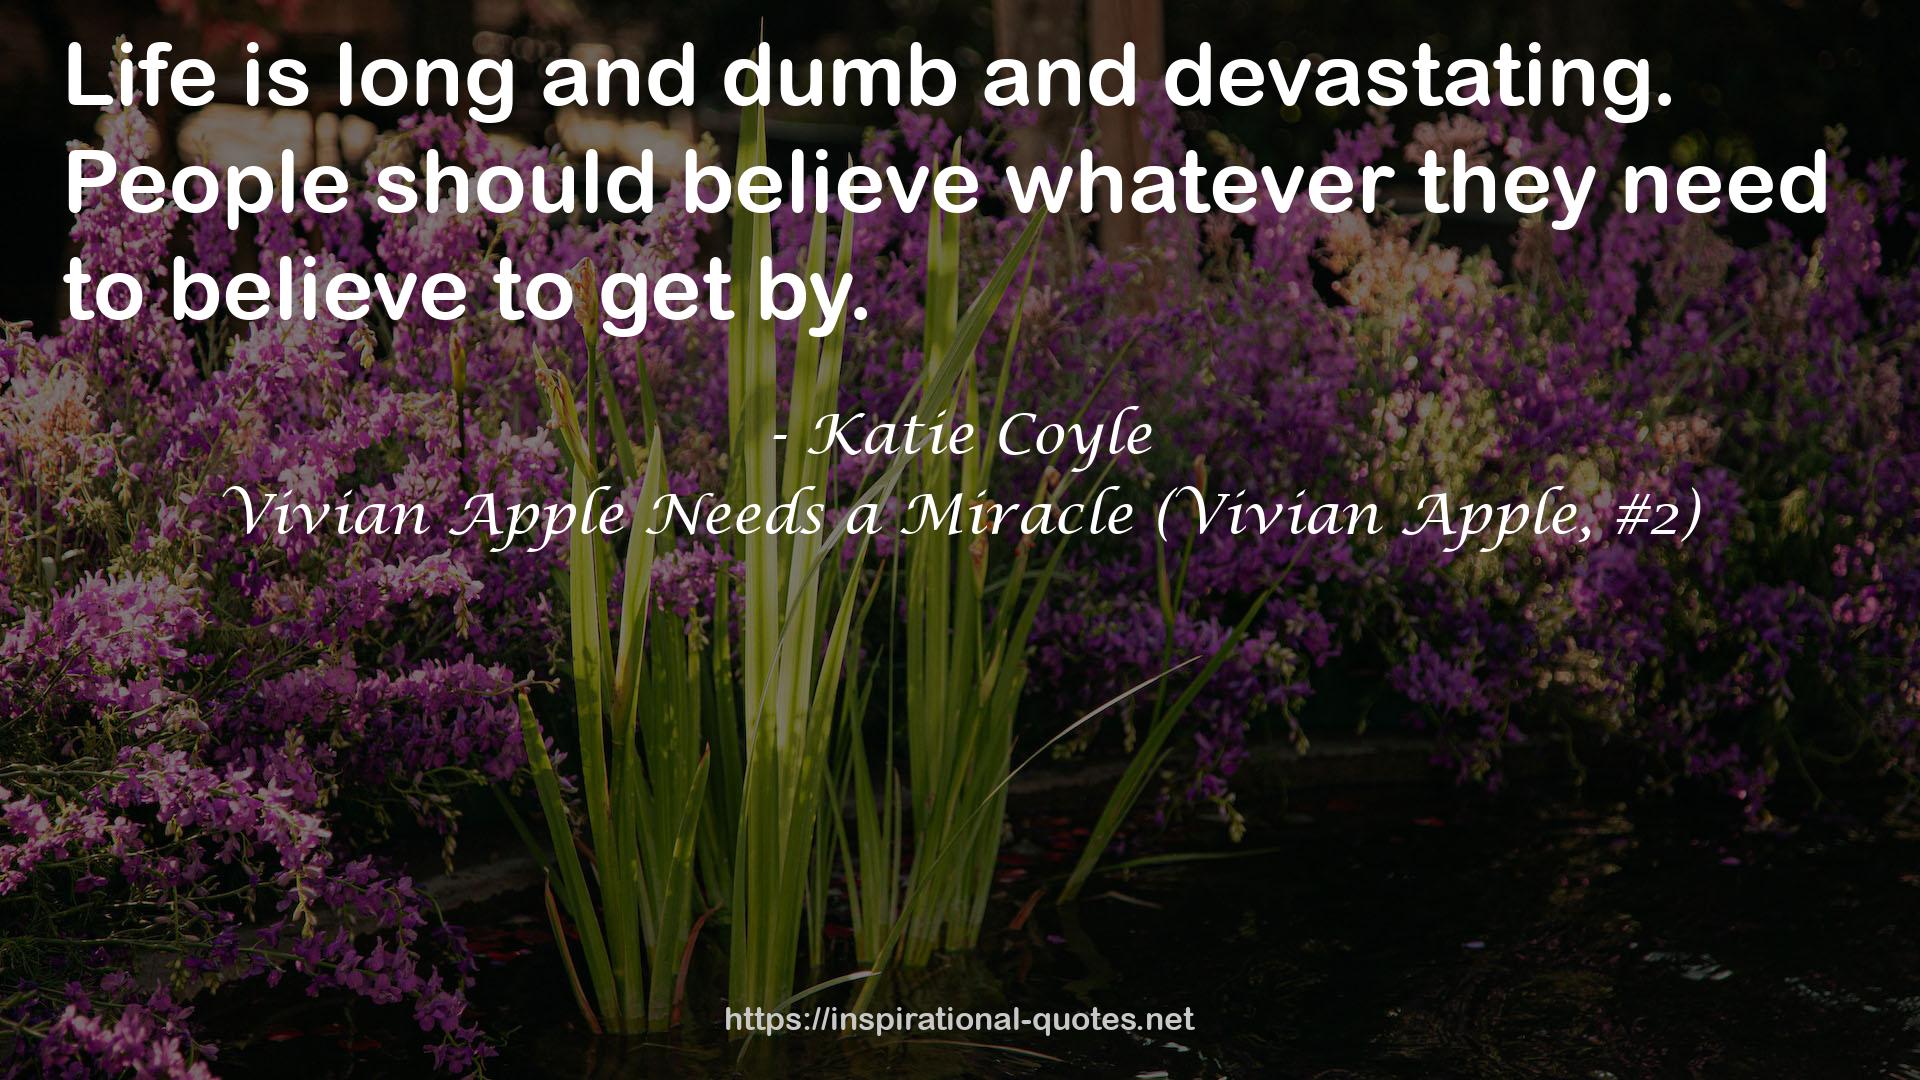 Vivian Apple Needs a Miracle (Vivian Apple, #2) QUOTES